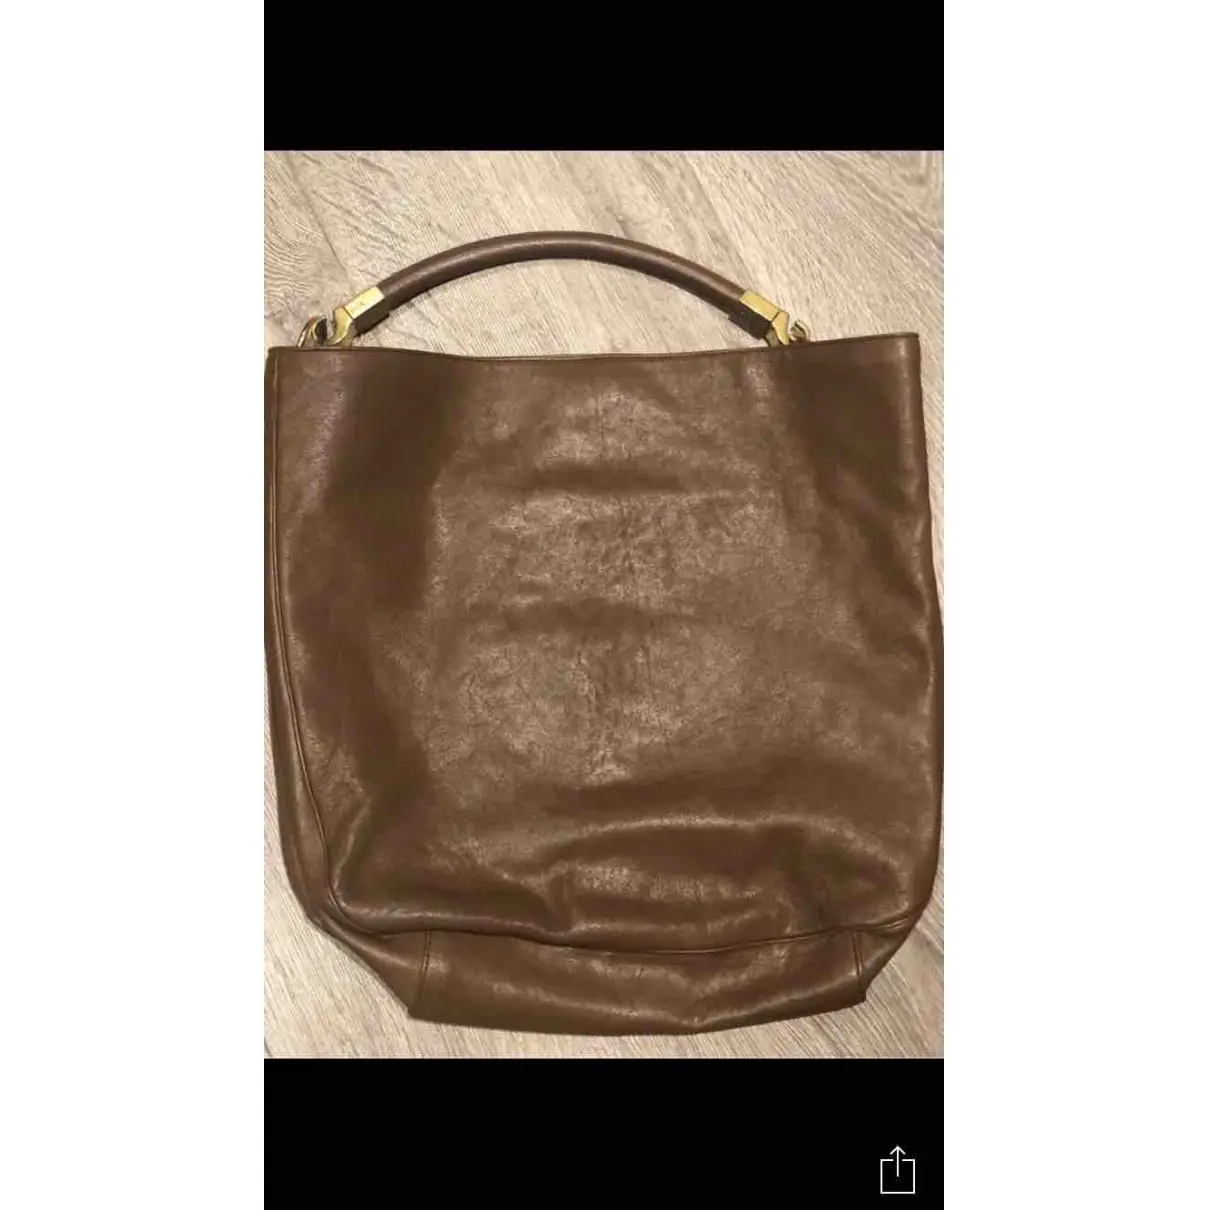 Yves Saint Laurent Roady leather handbag for sale - Vintage